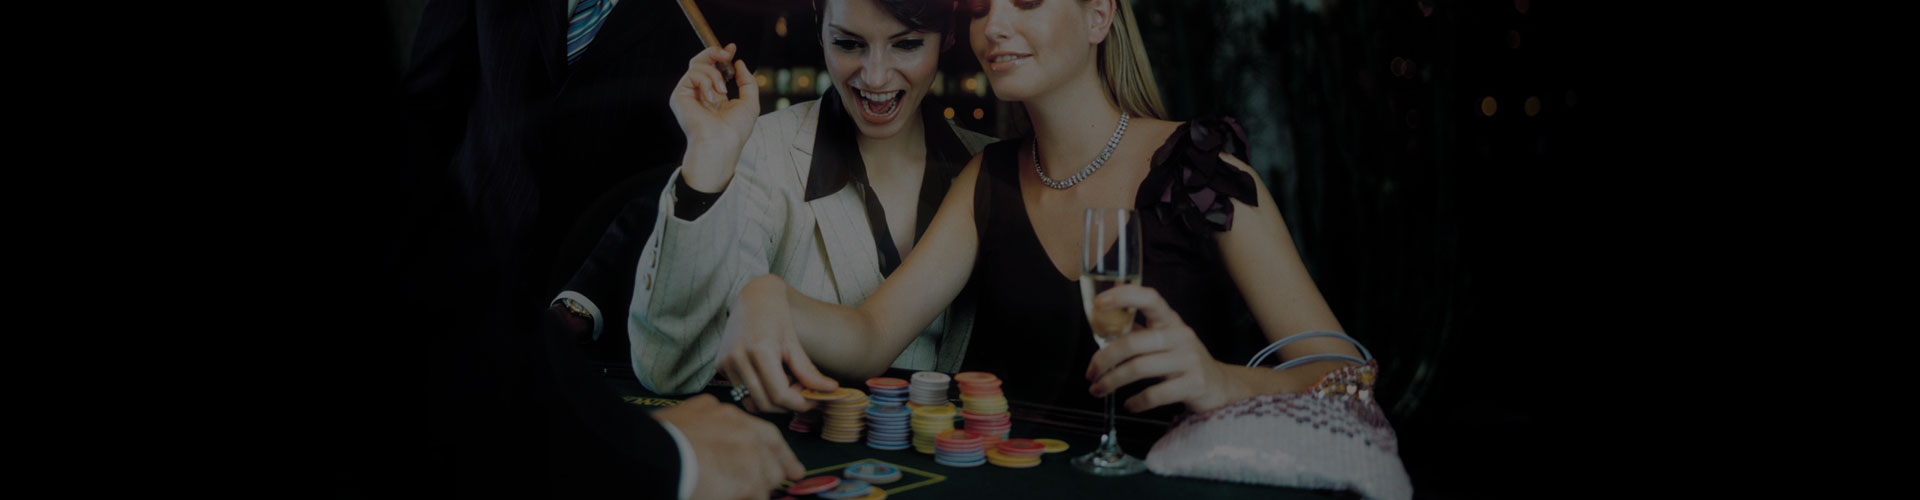 William hill casino club gana bonos Bwin 441886